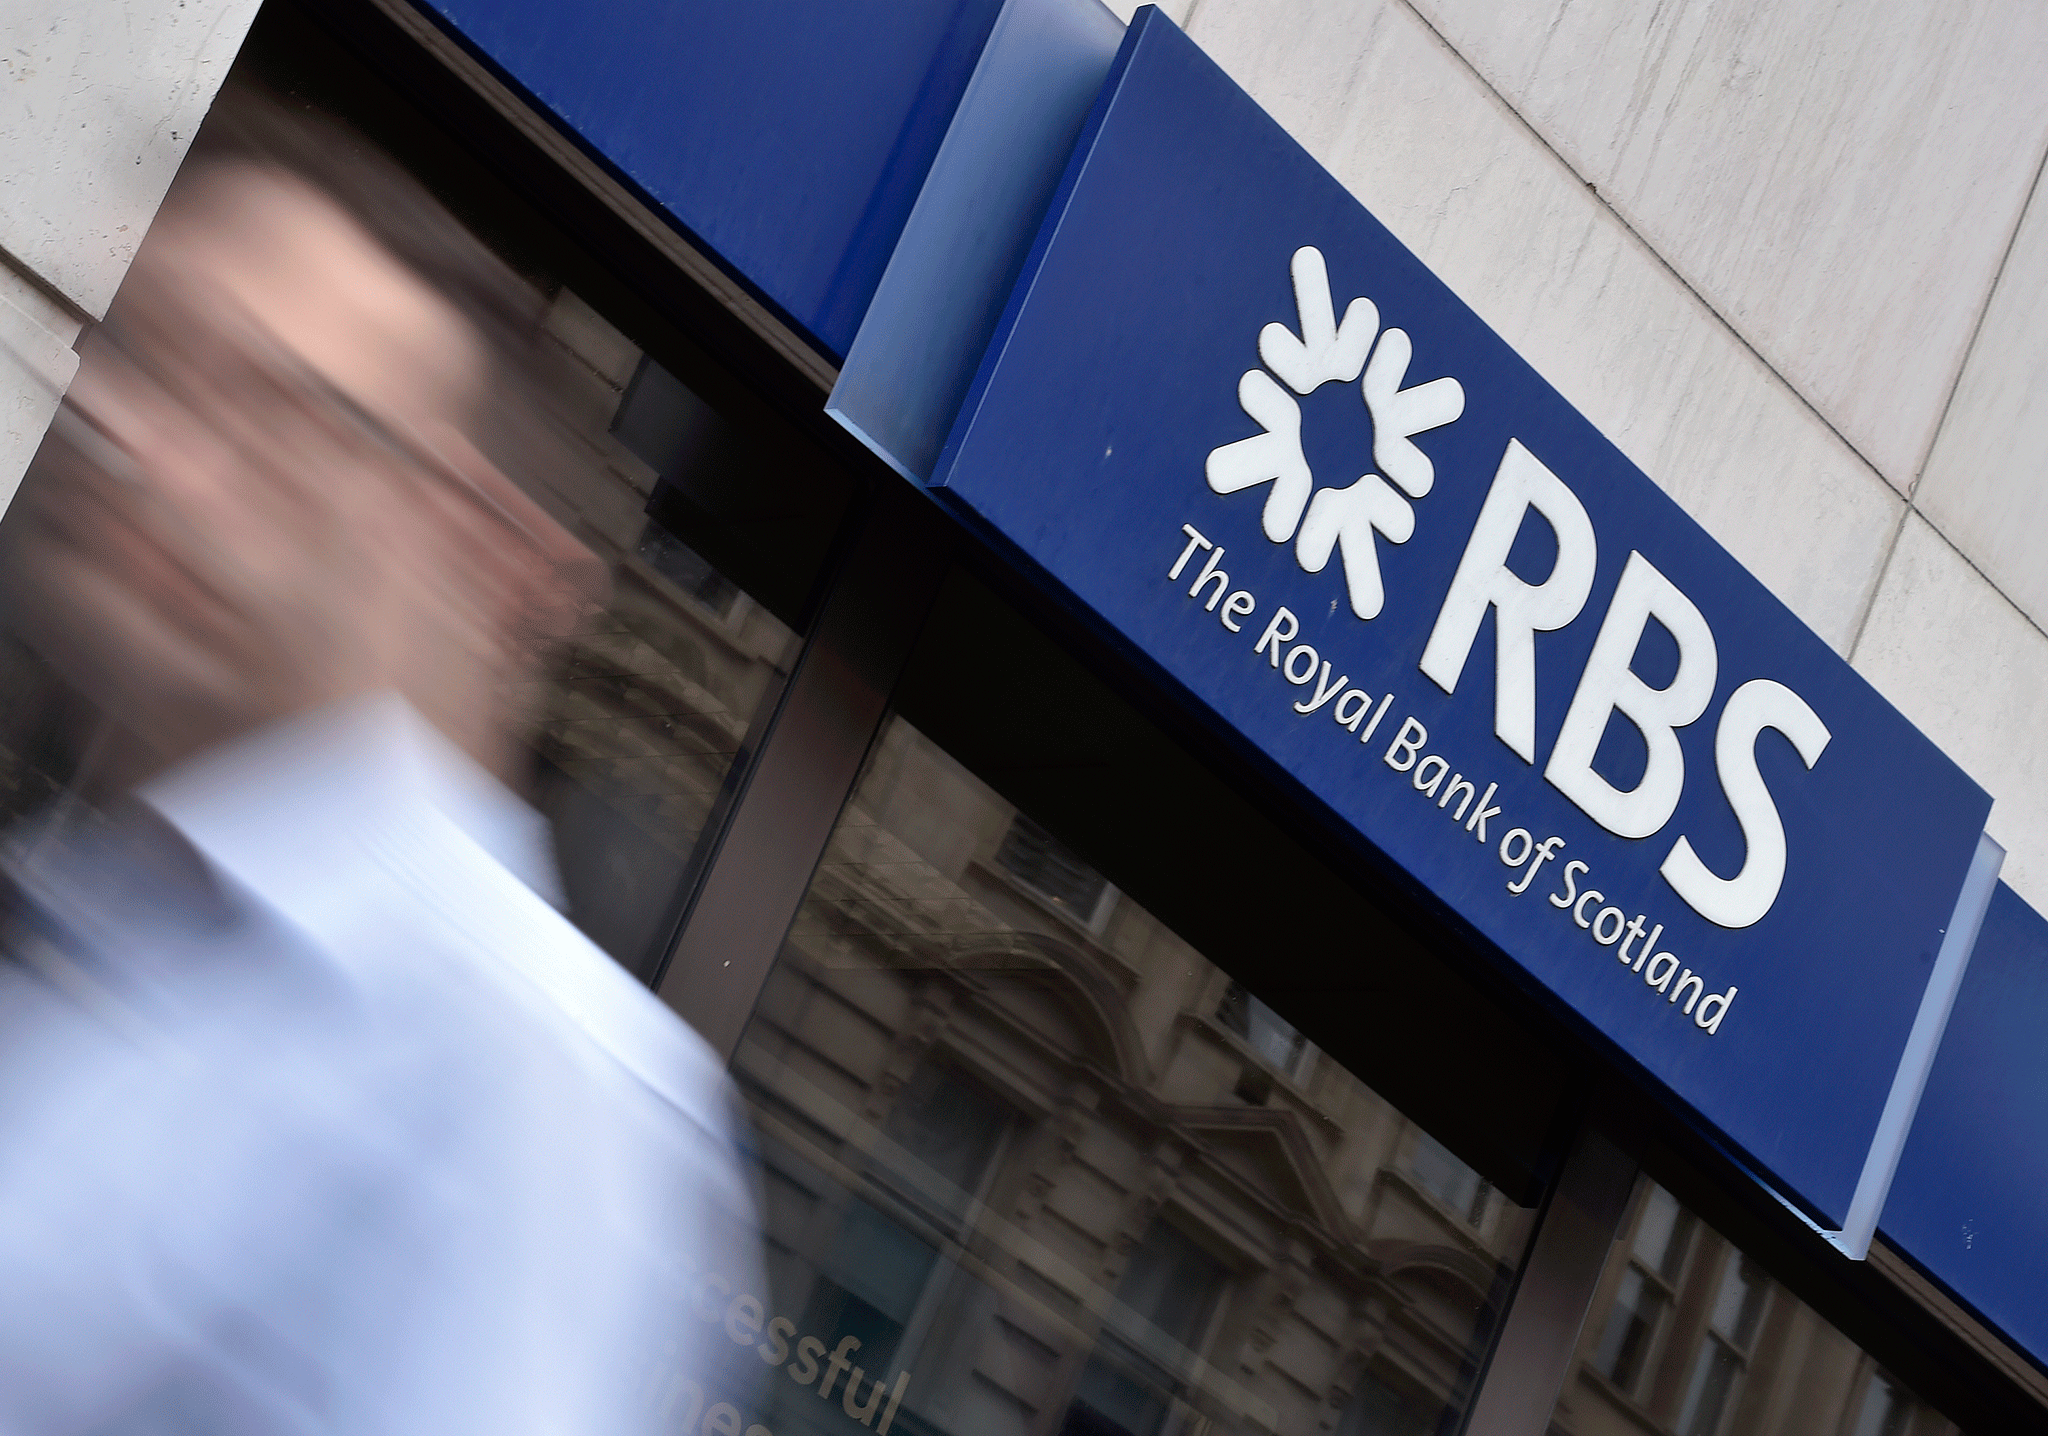 RBS pays big bonuses, Standard Life loses exec on day to bury news